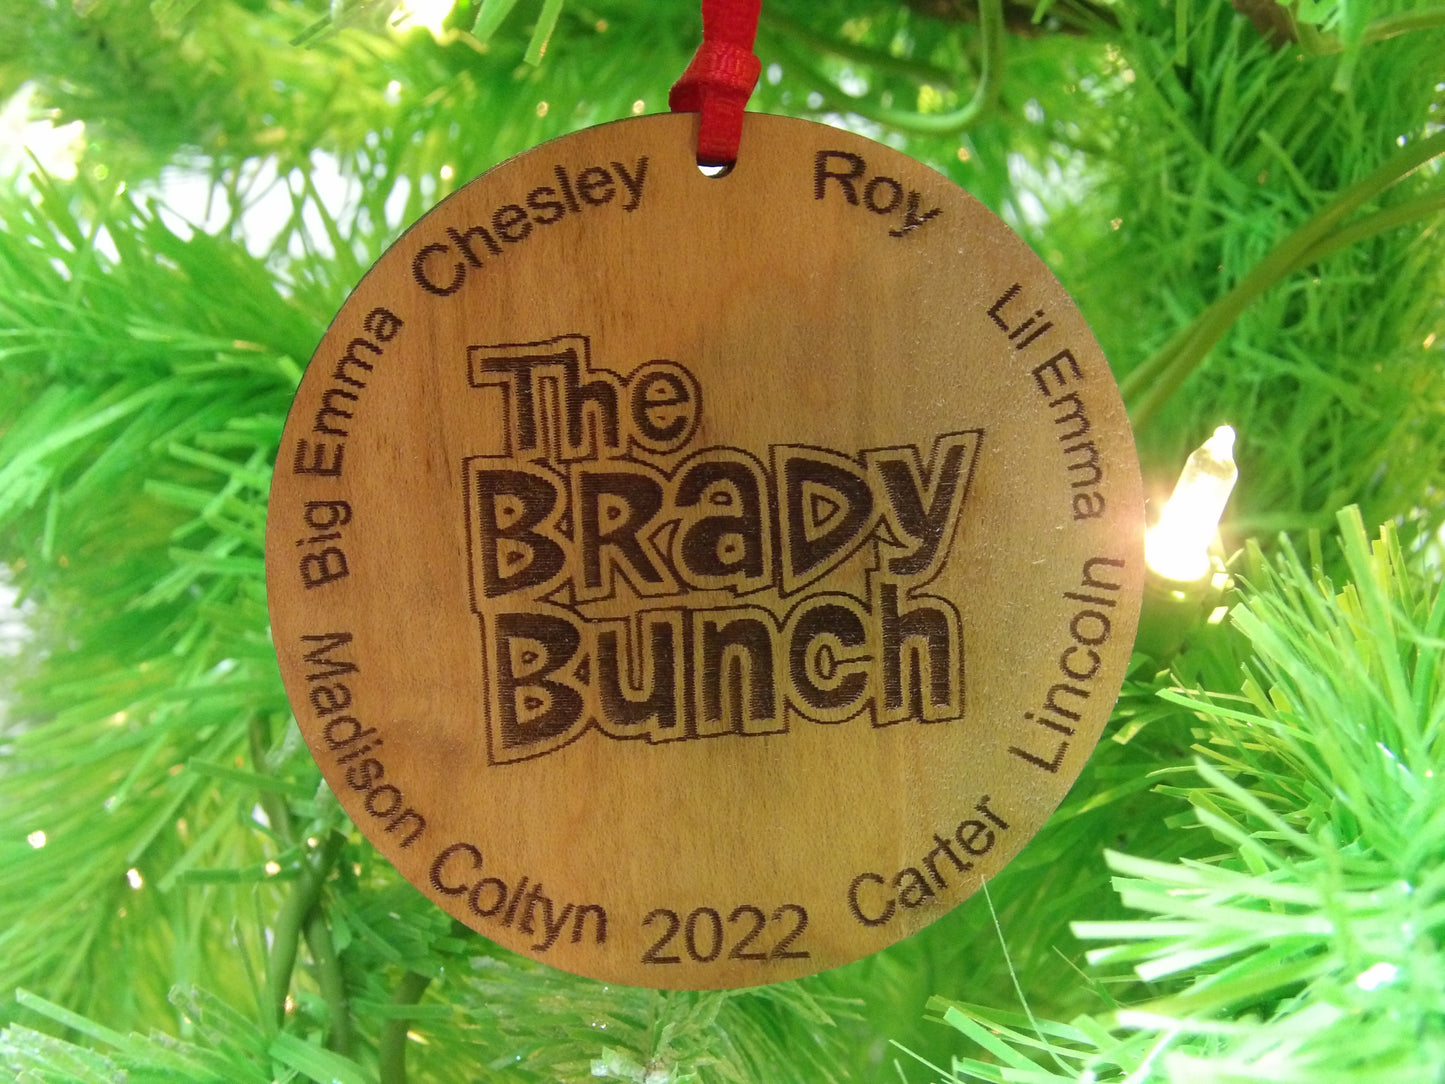 The Brady Bunch Circular Family Ornament